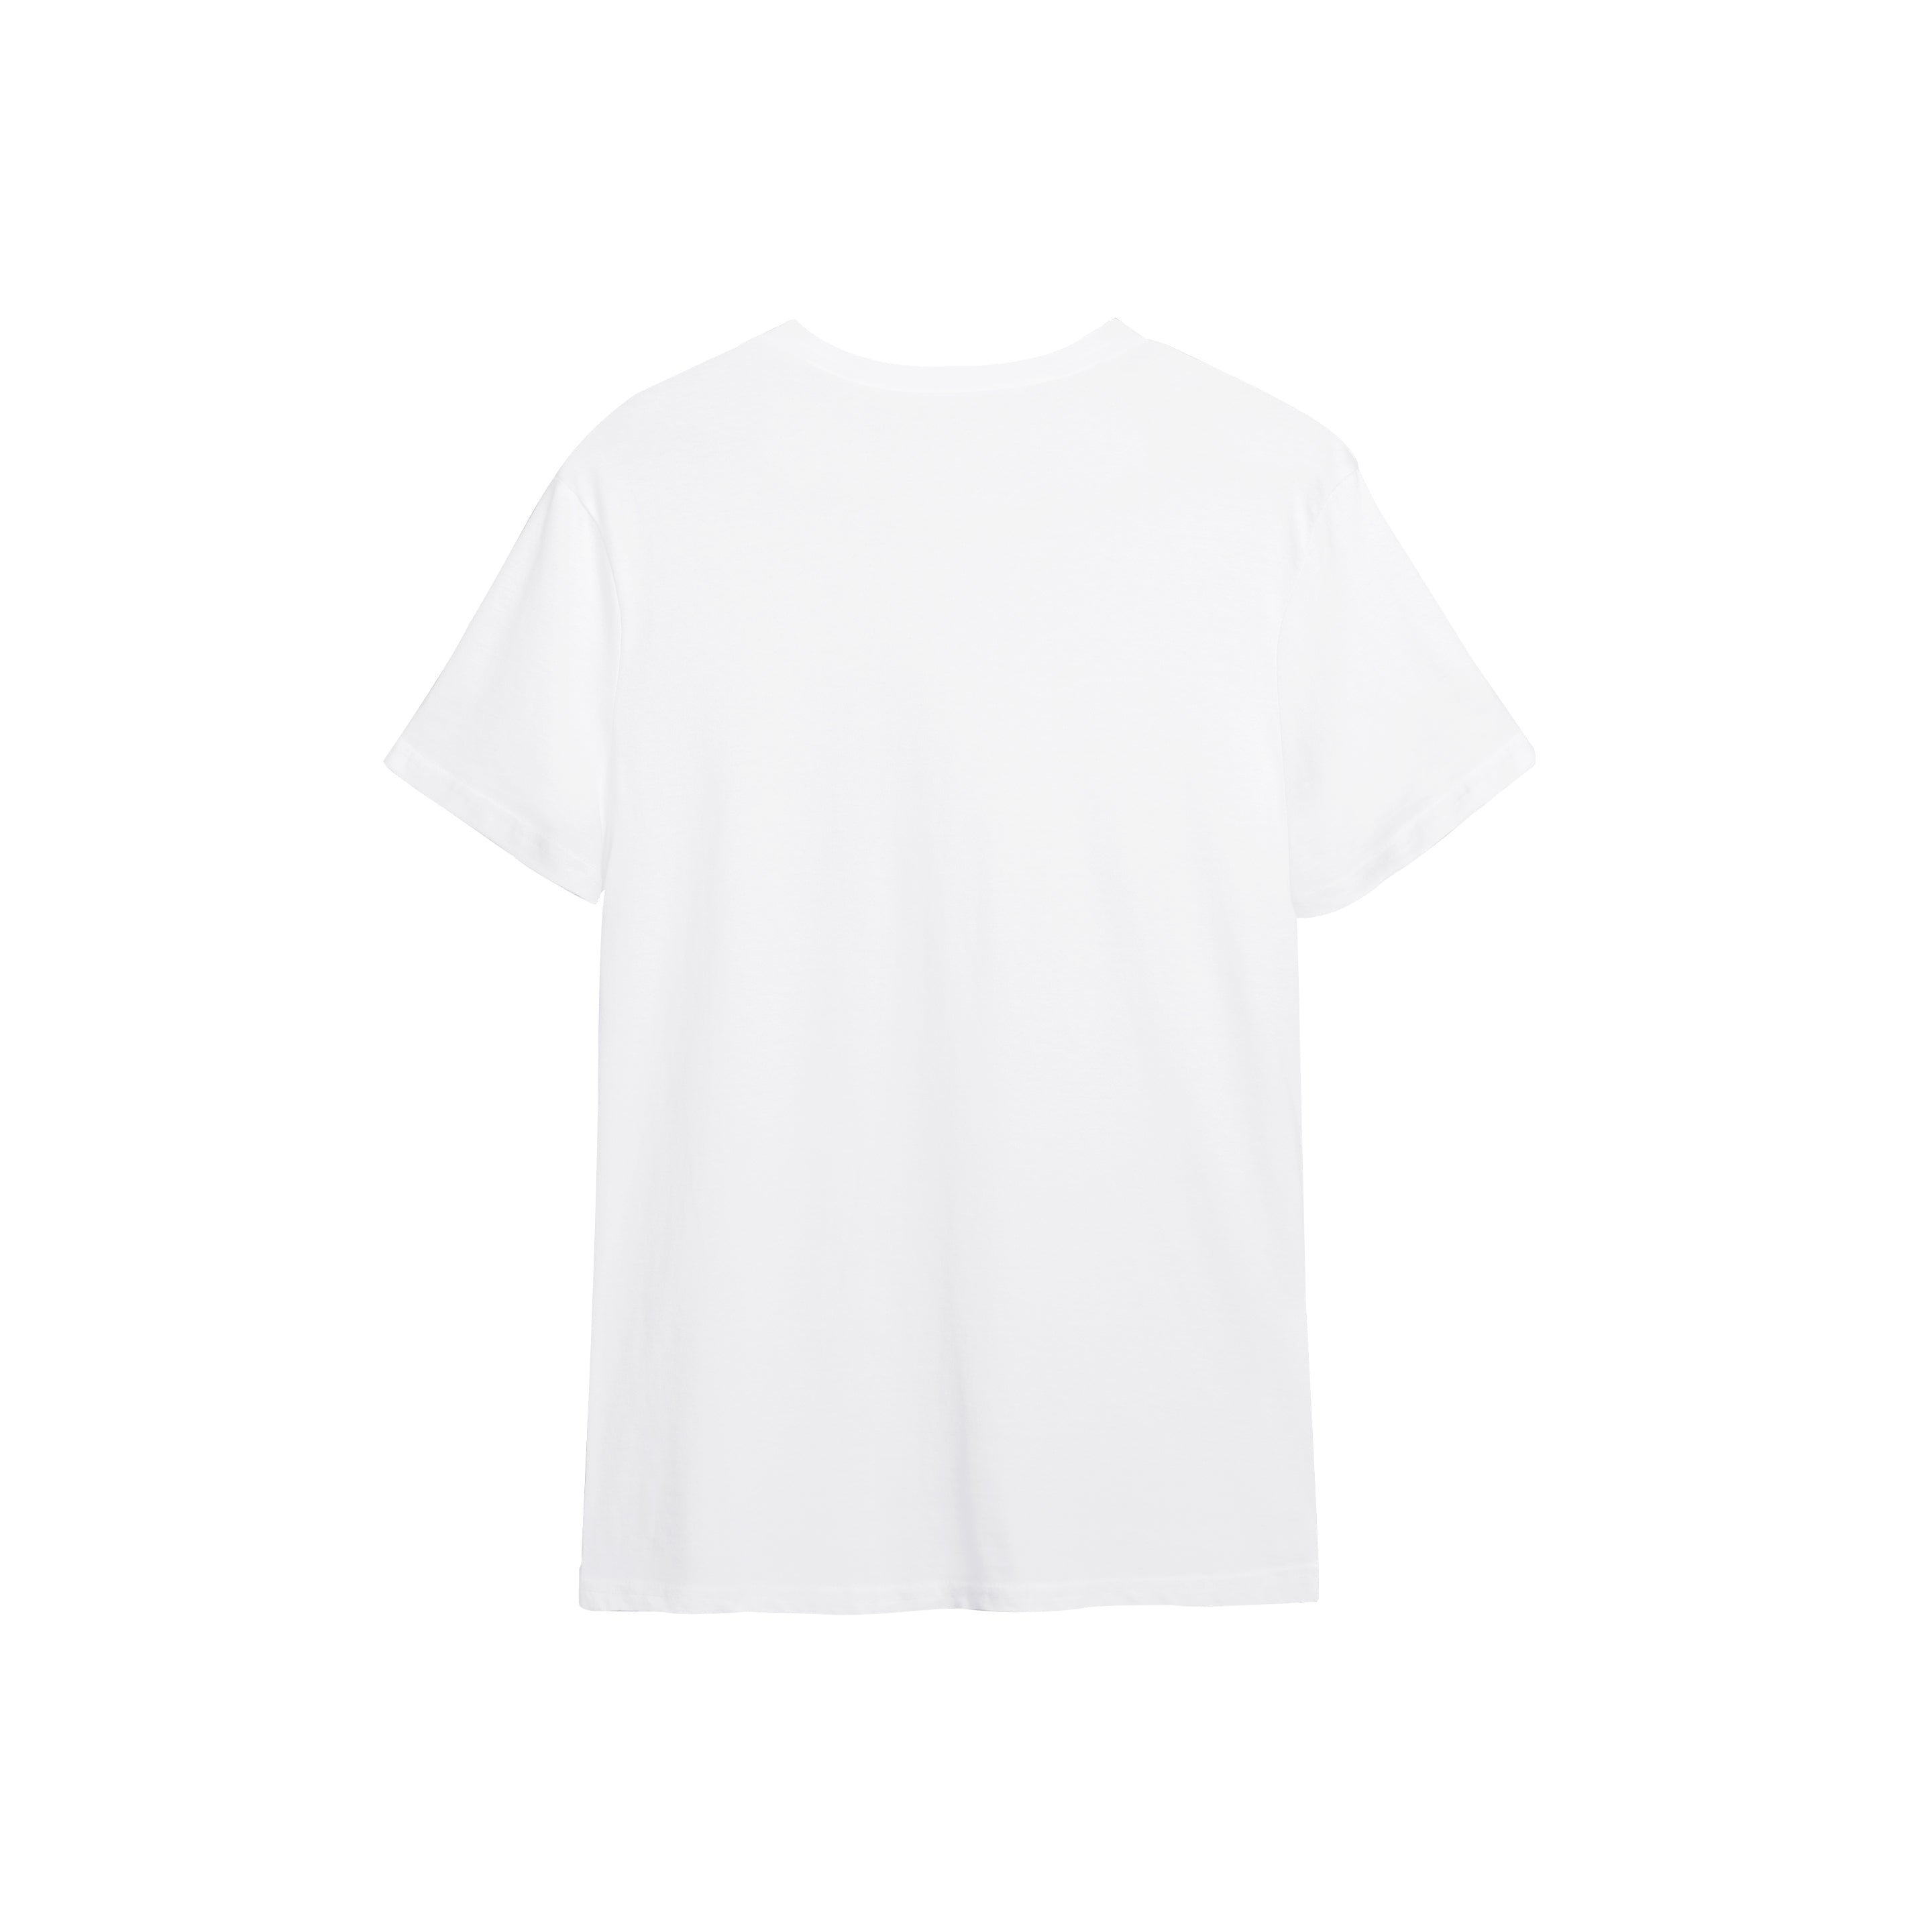 BLUETTI T-shirt, L / white